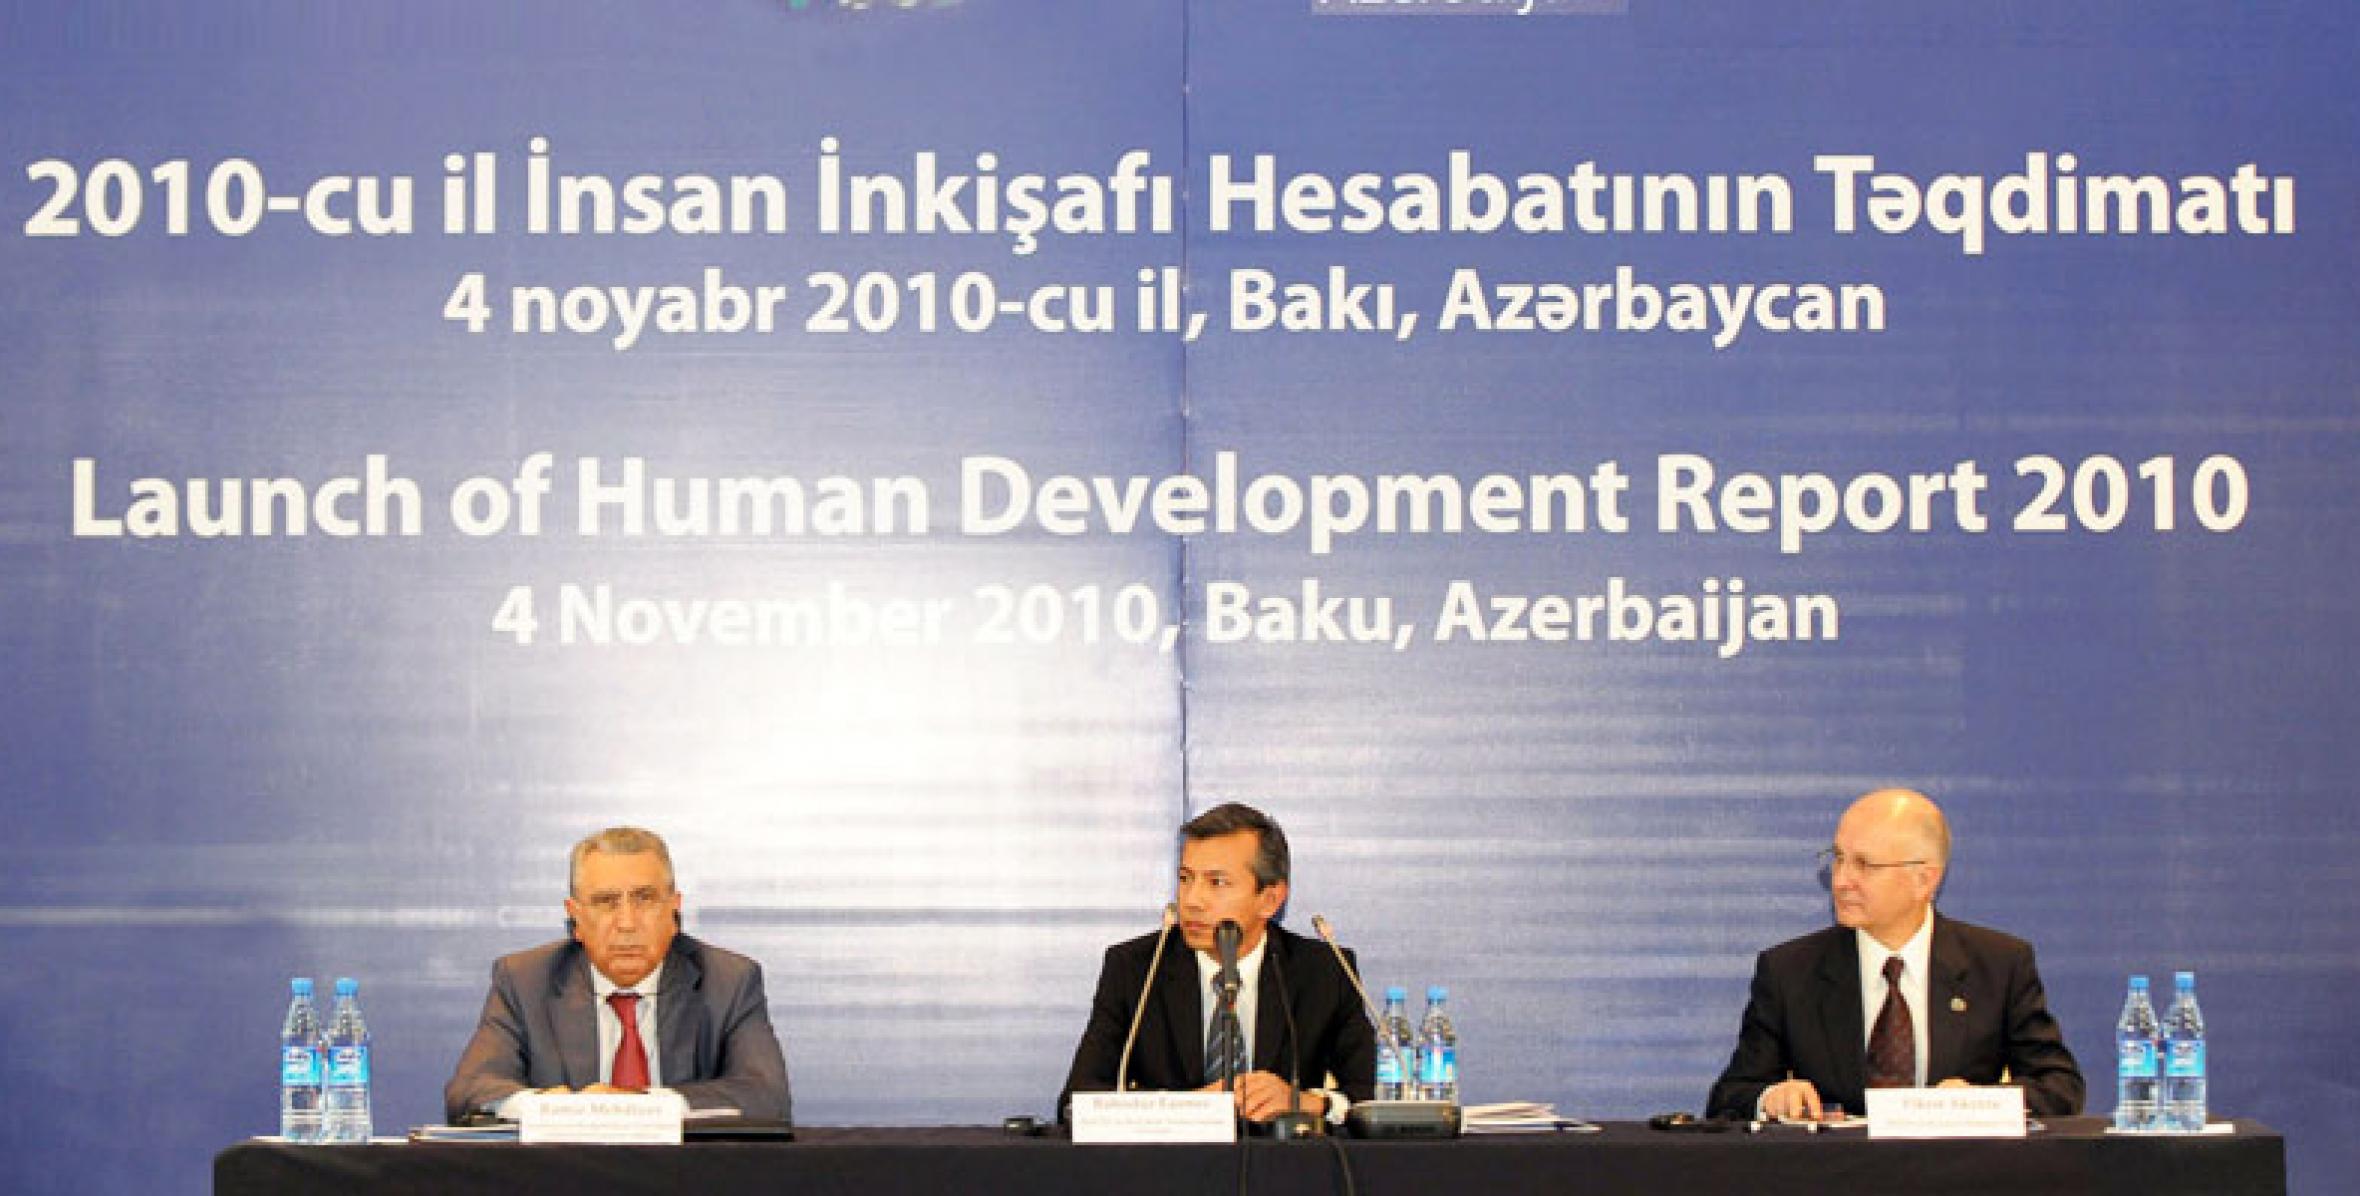 Руководитель Администрации Президента принял участие на презентации Отчета о развитии человечества за 2010 год Программы развития ООН